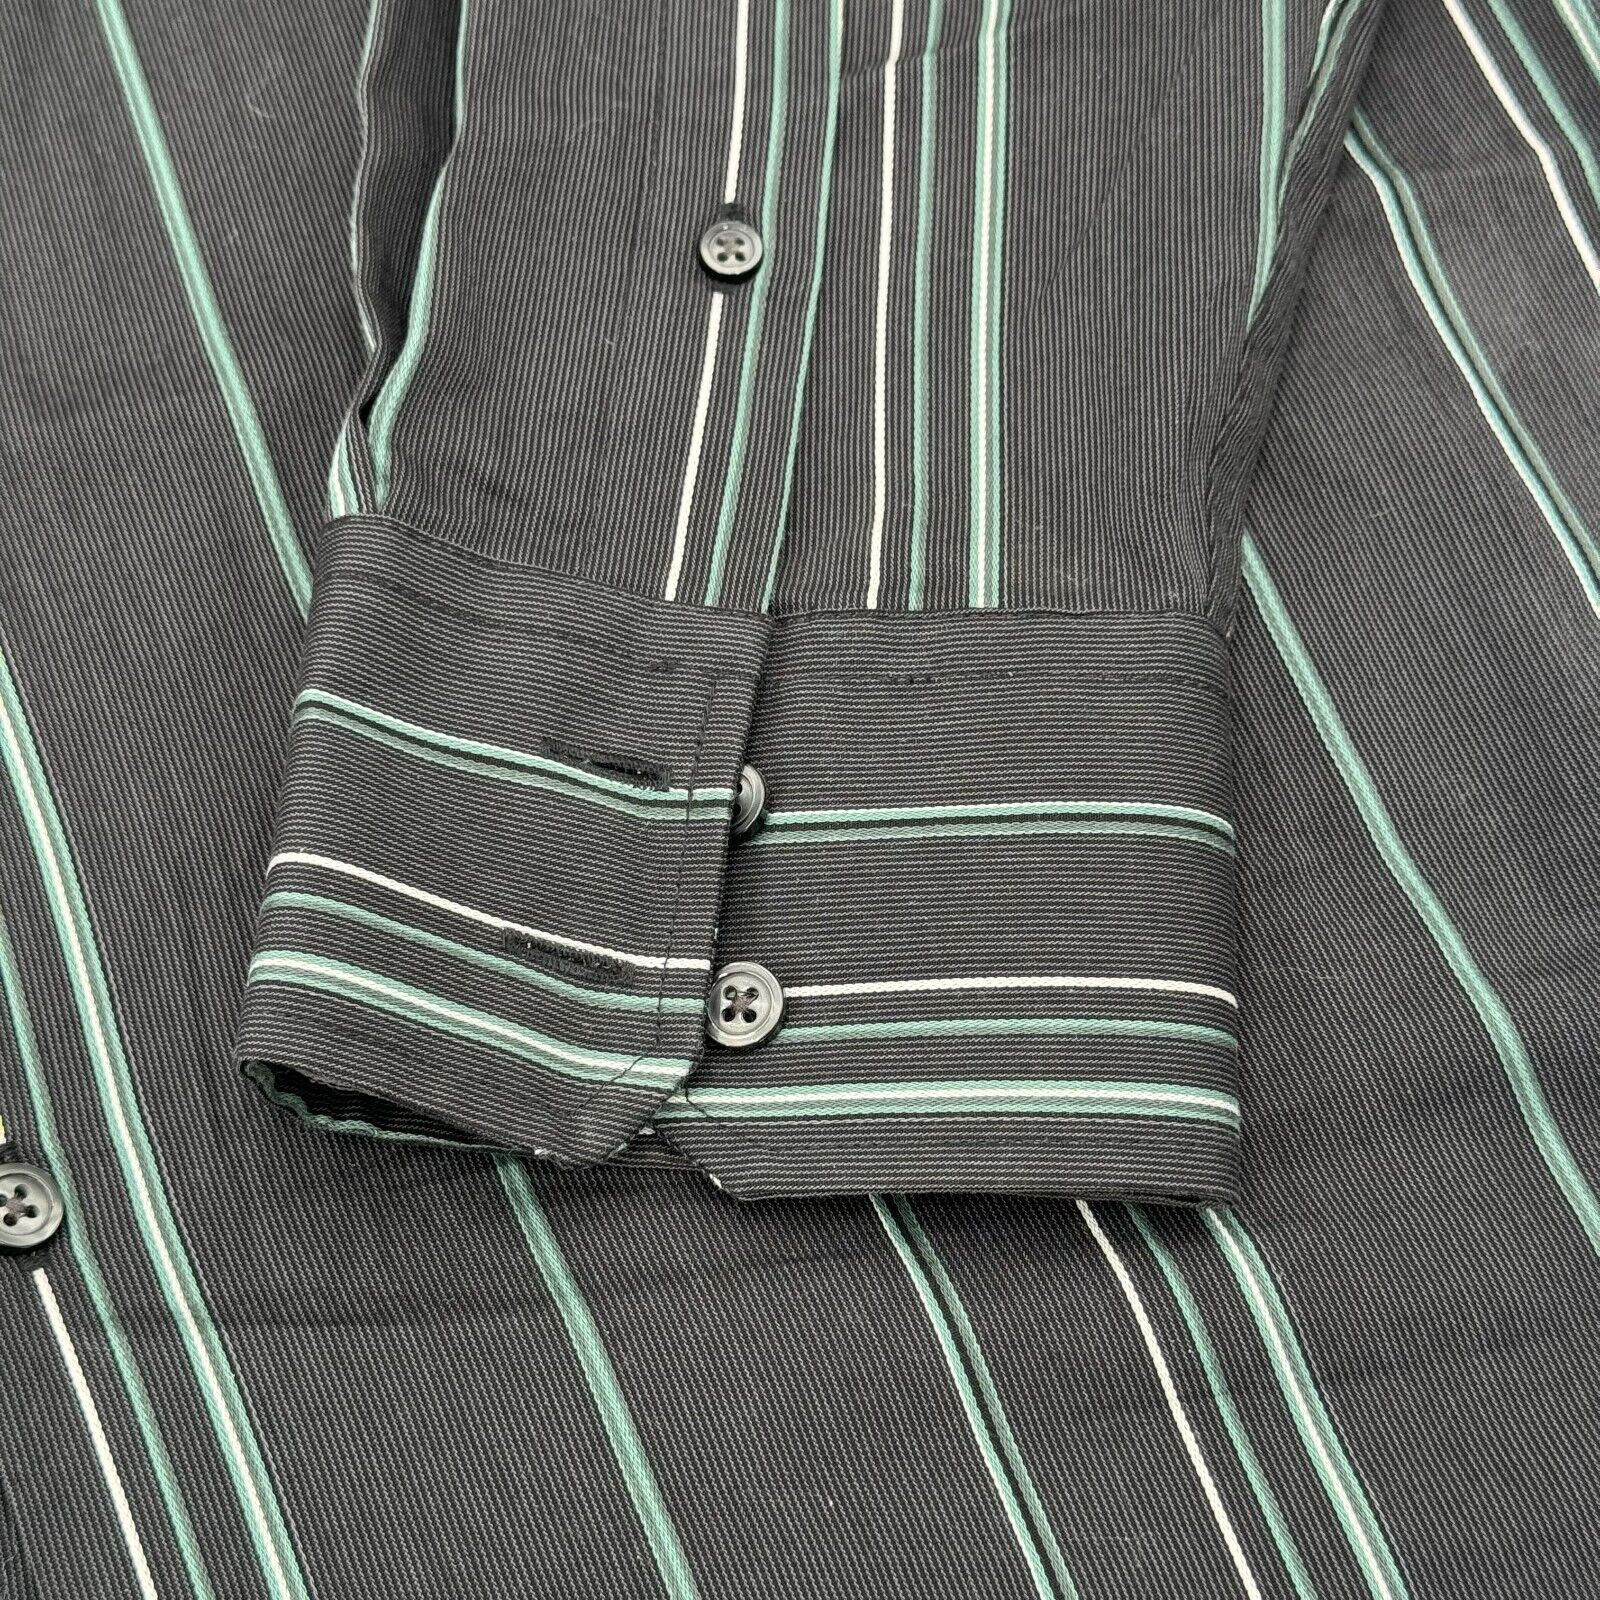 Alfani Gray Green Stripes Long Sleeve Button Up Shirt Mens XL